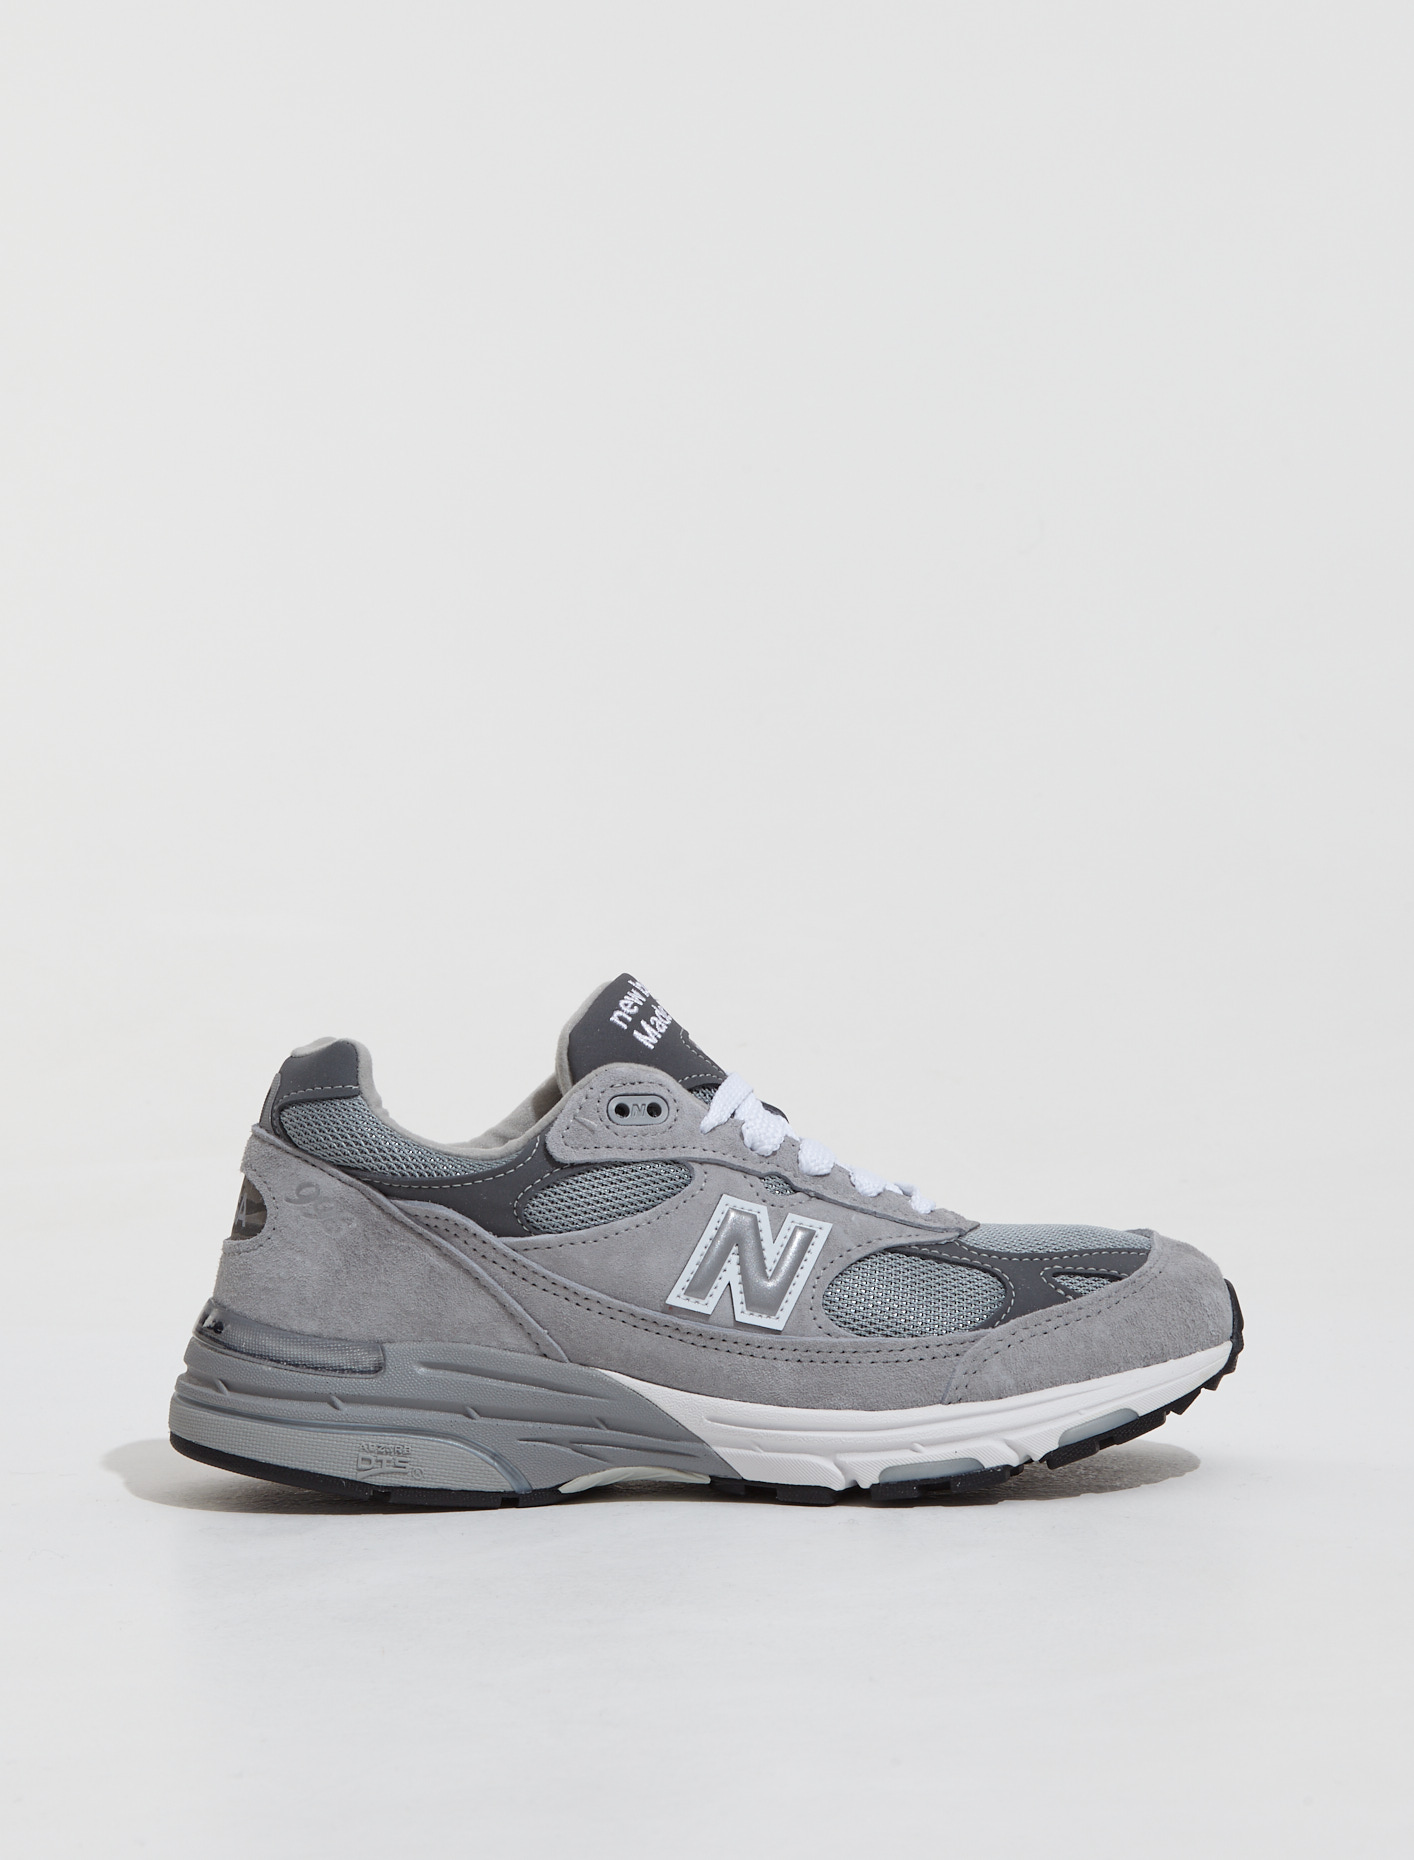 993 'Made in USA' Sneaker in Grey